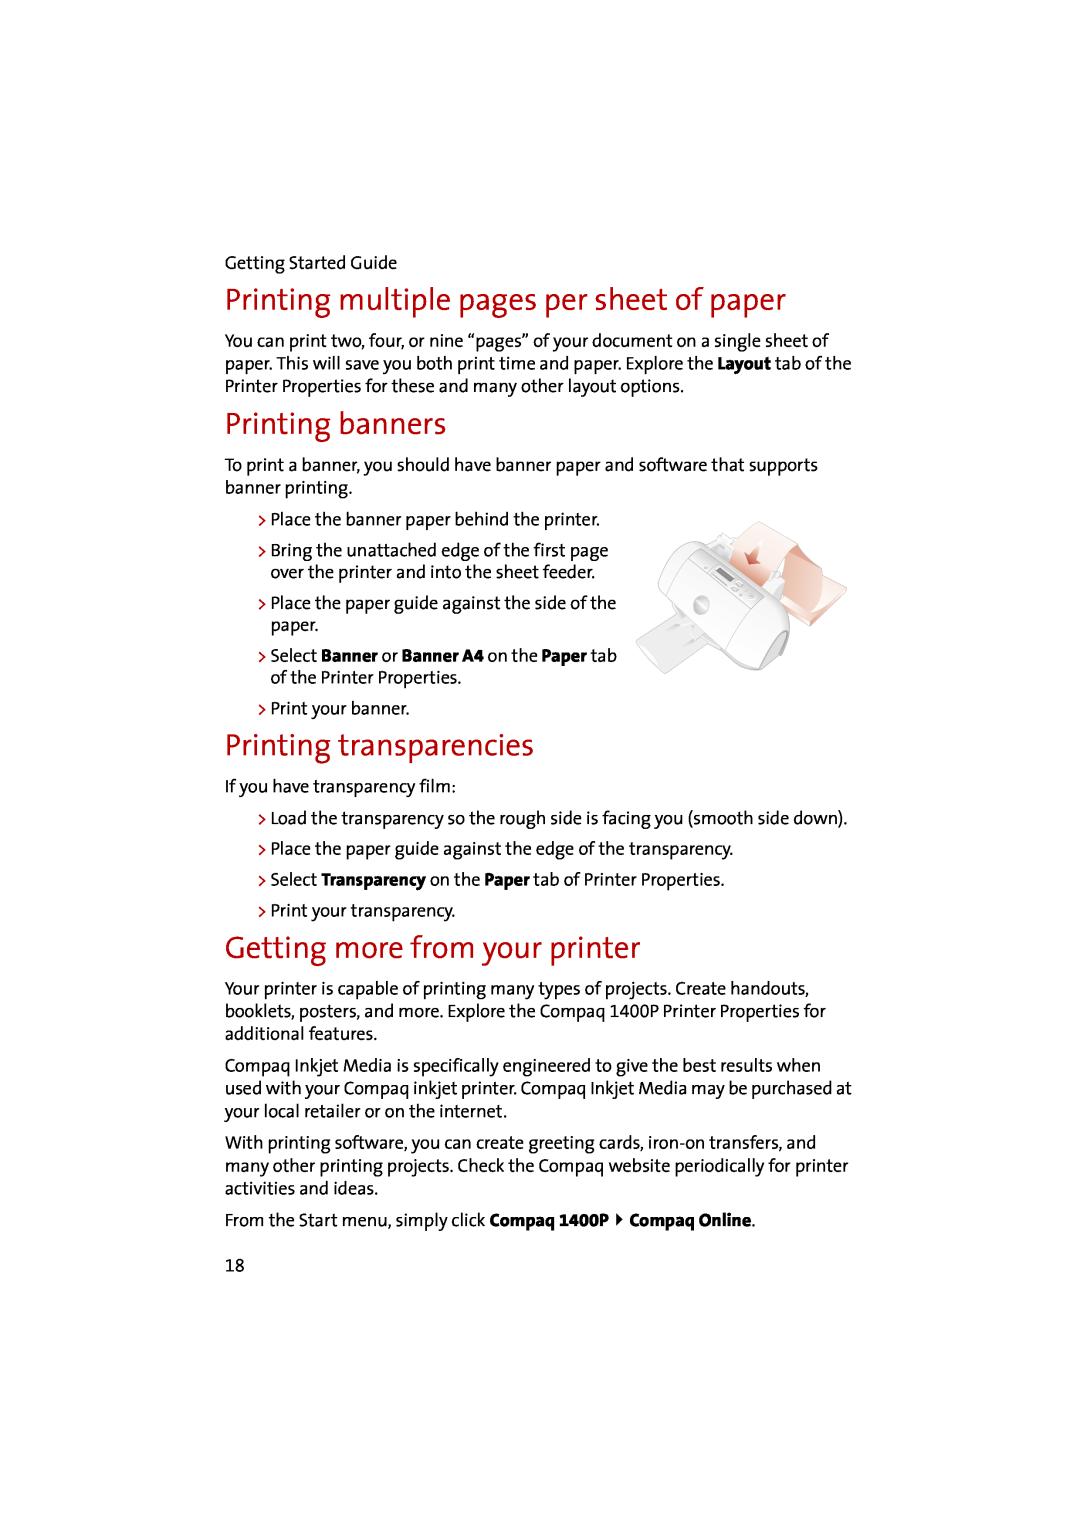 Compaq 1400P manual Printing multiple pages per sheet of paper, Printing banners, Printing transparencies 